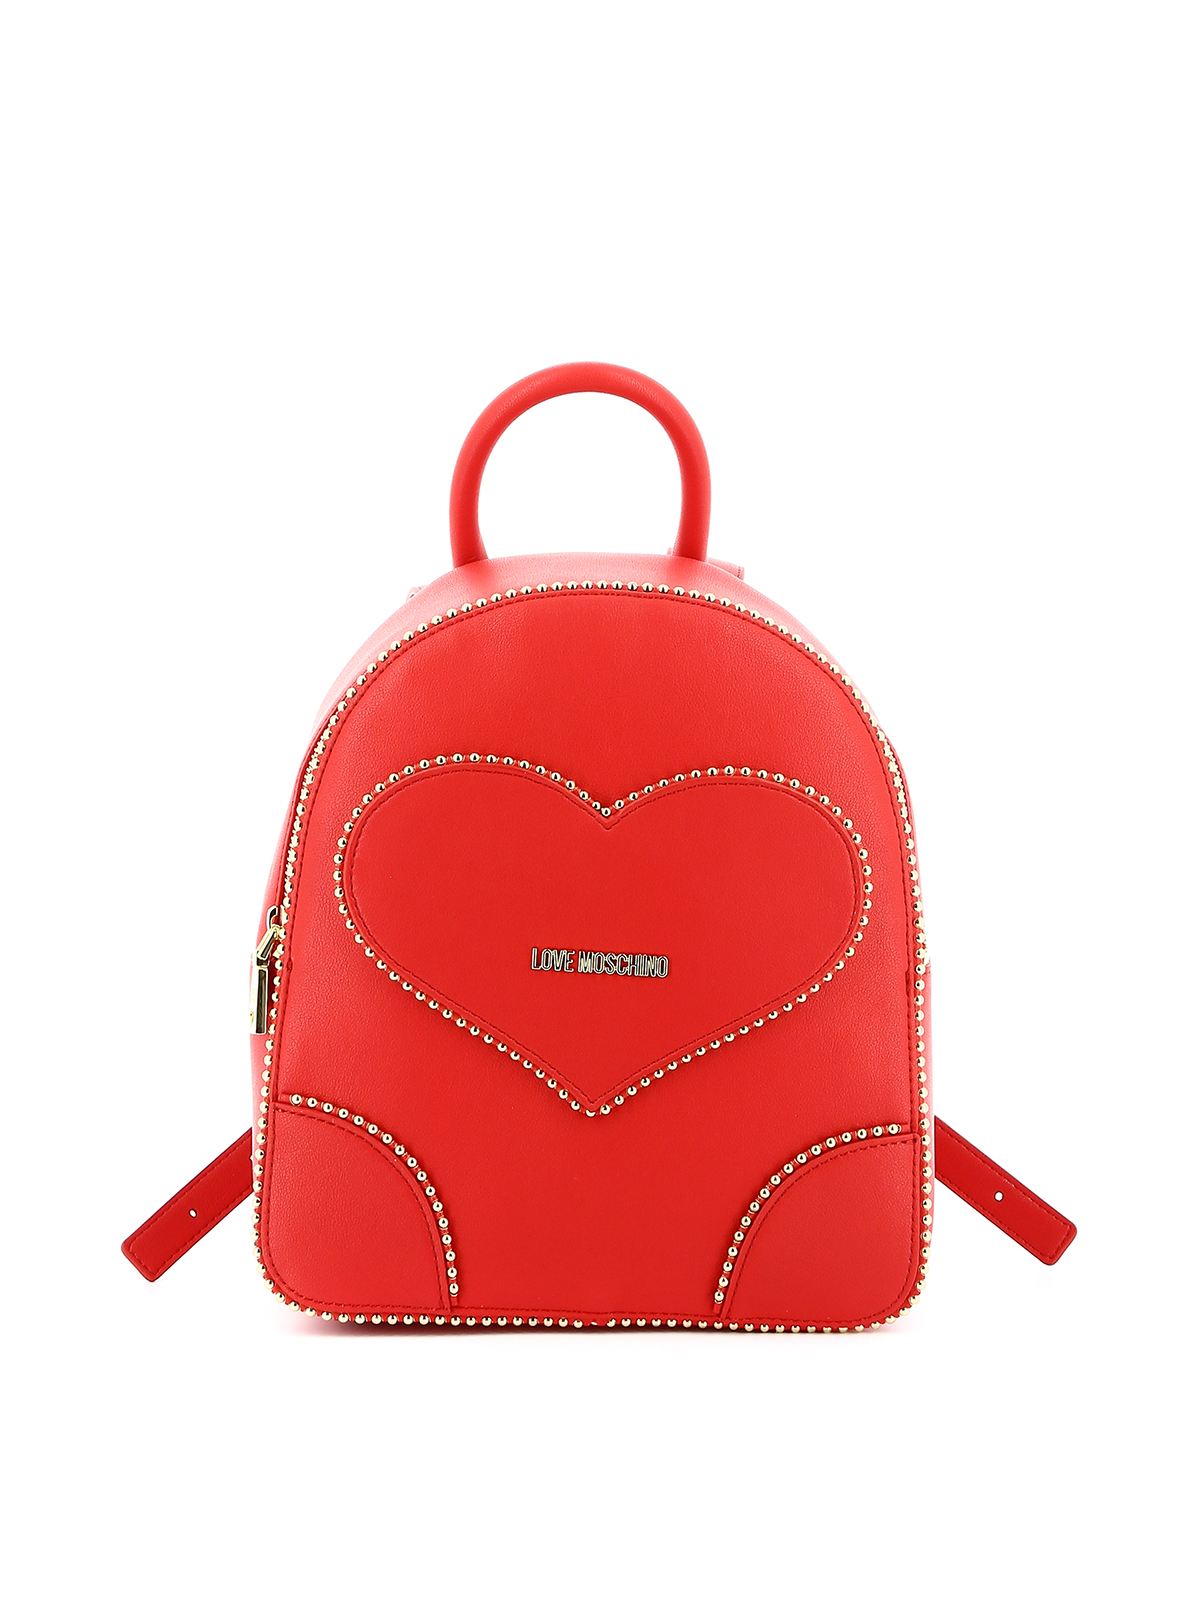 love moschino red heart bag